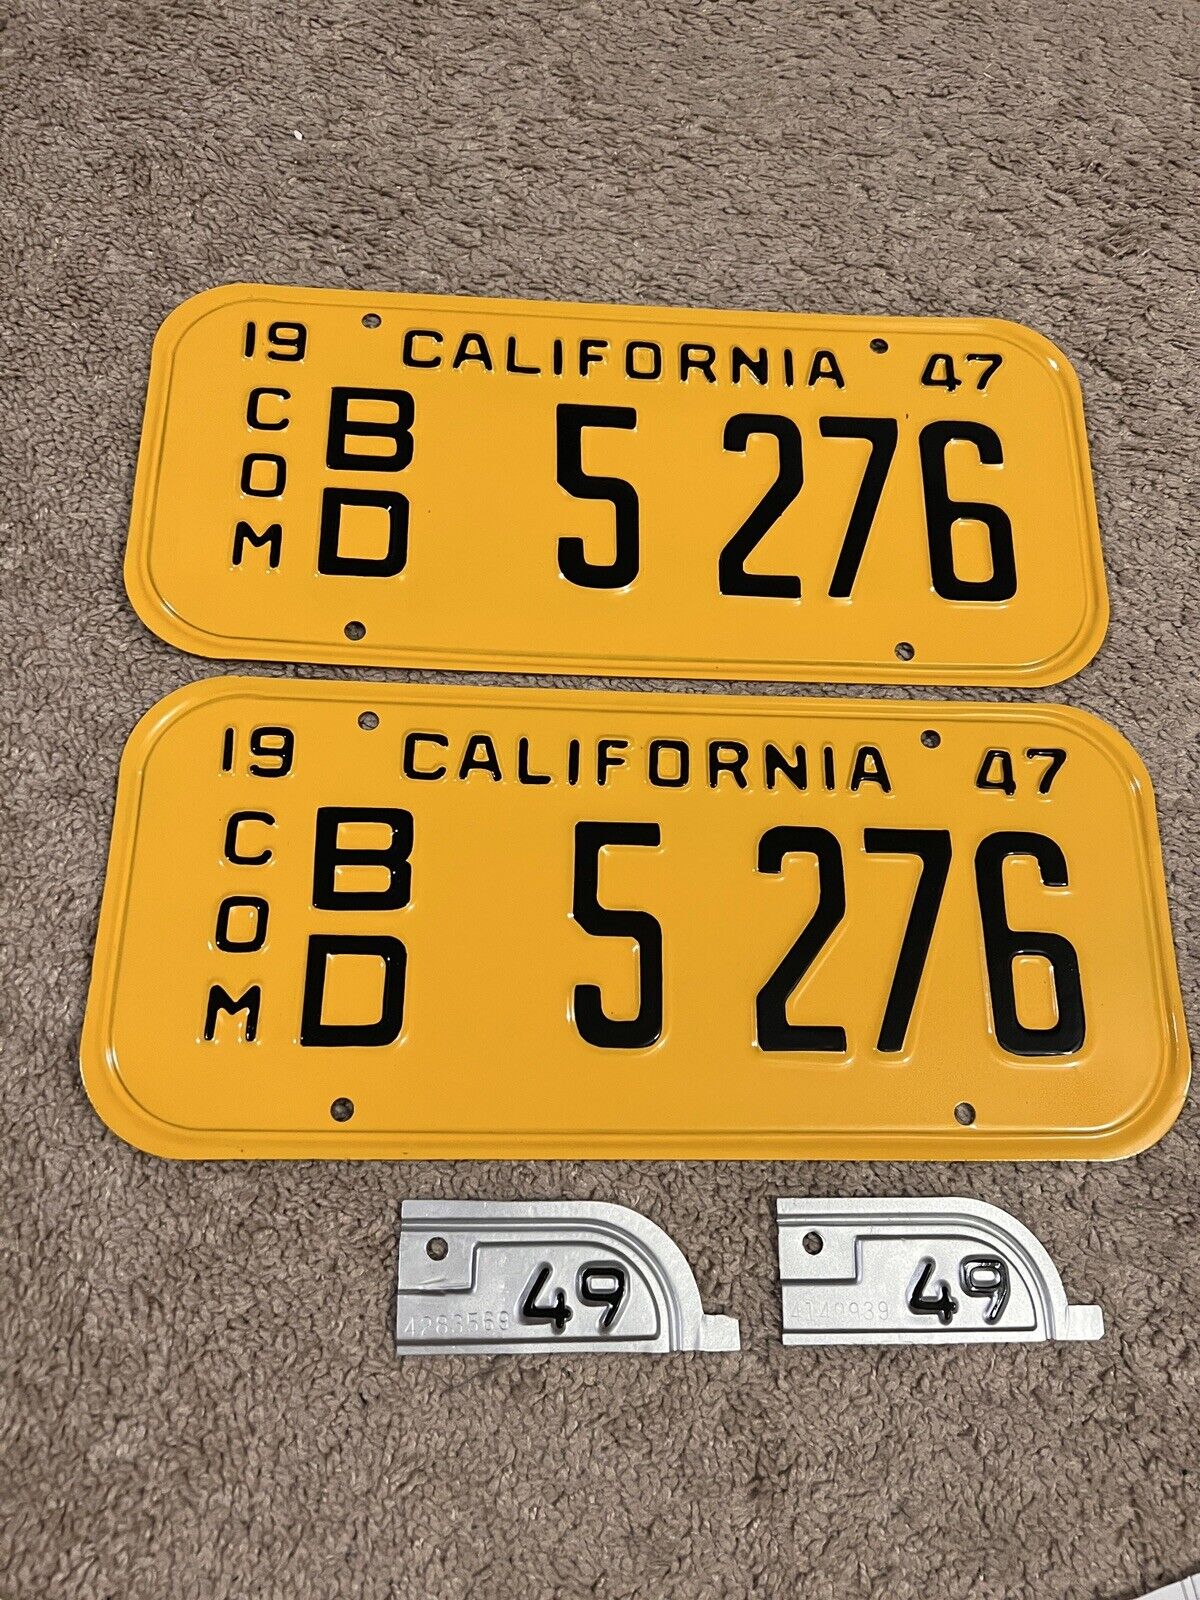 1947 1948 1949 1950 CA Truck License Plate Pair Restored DMV Clear +49 Tags